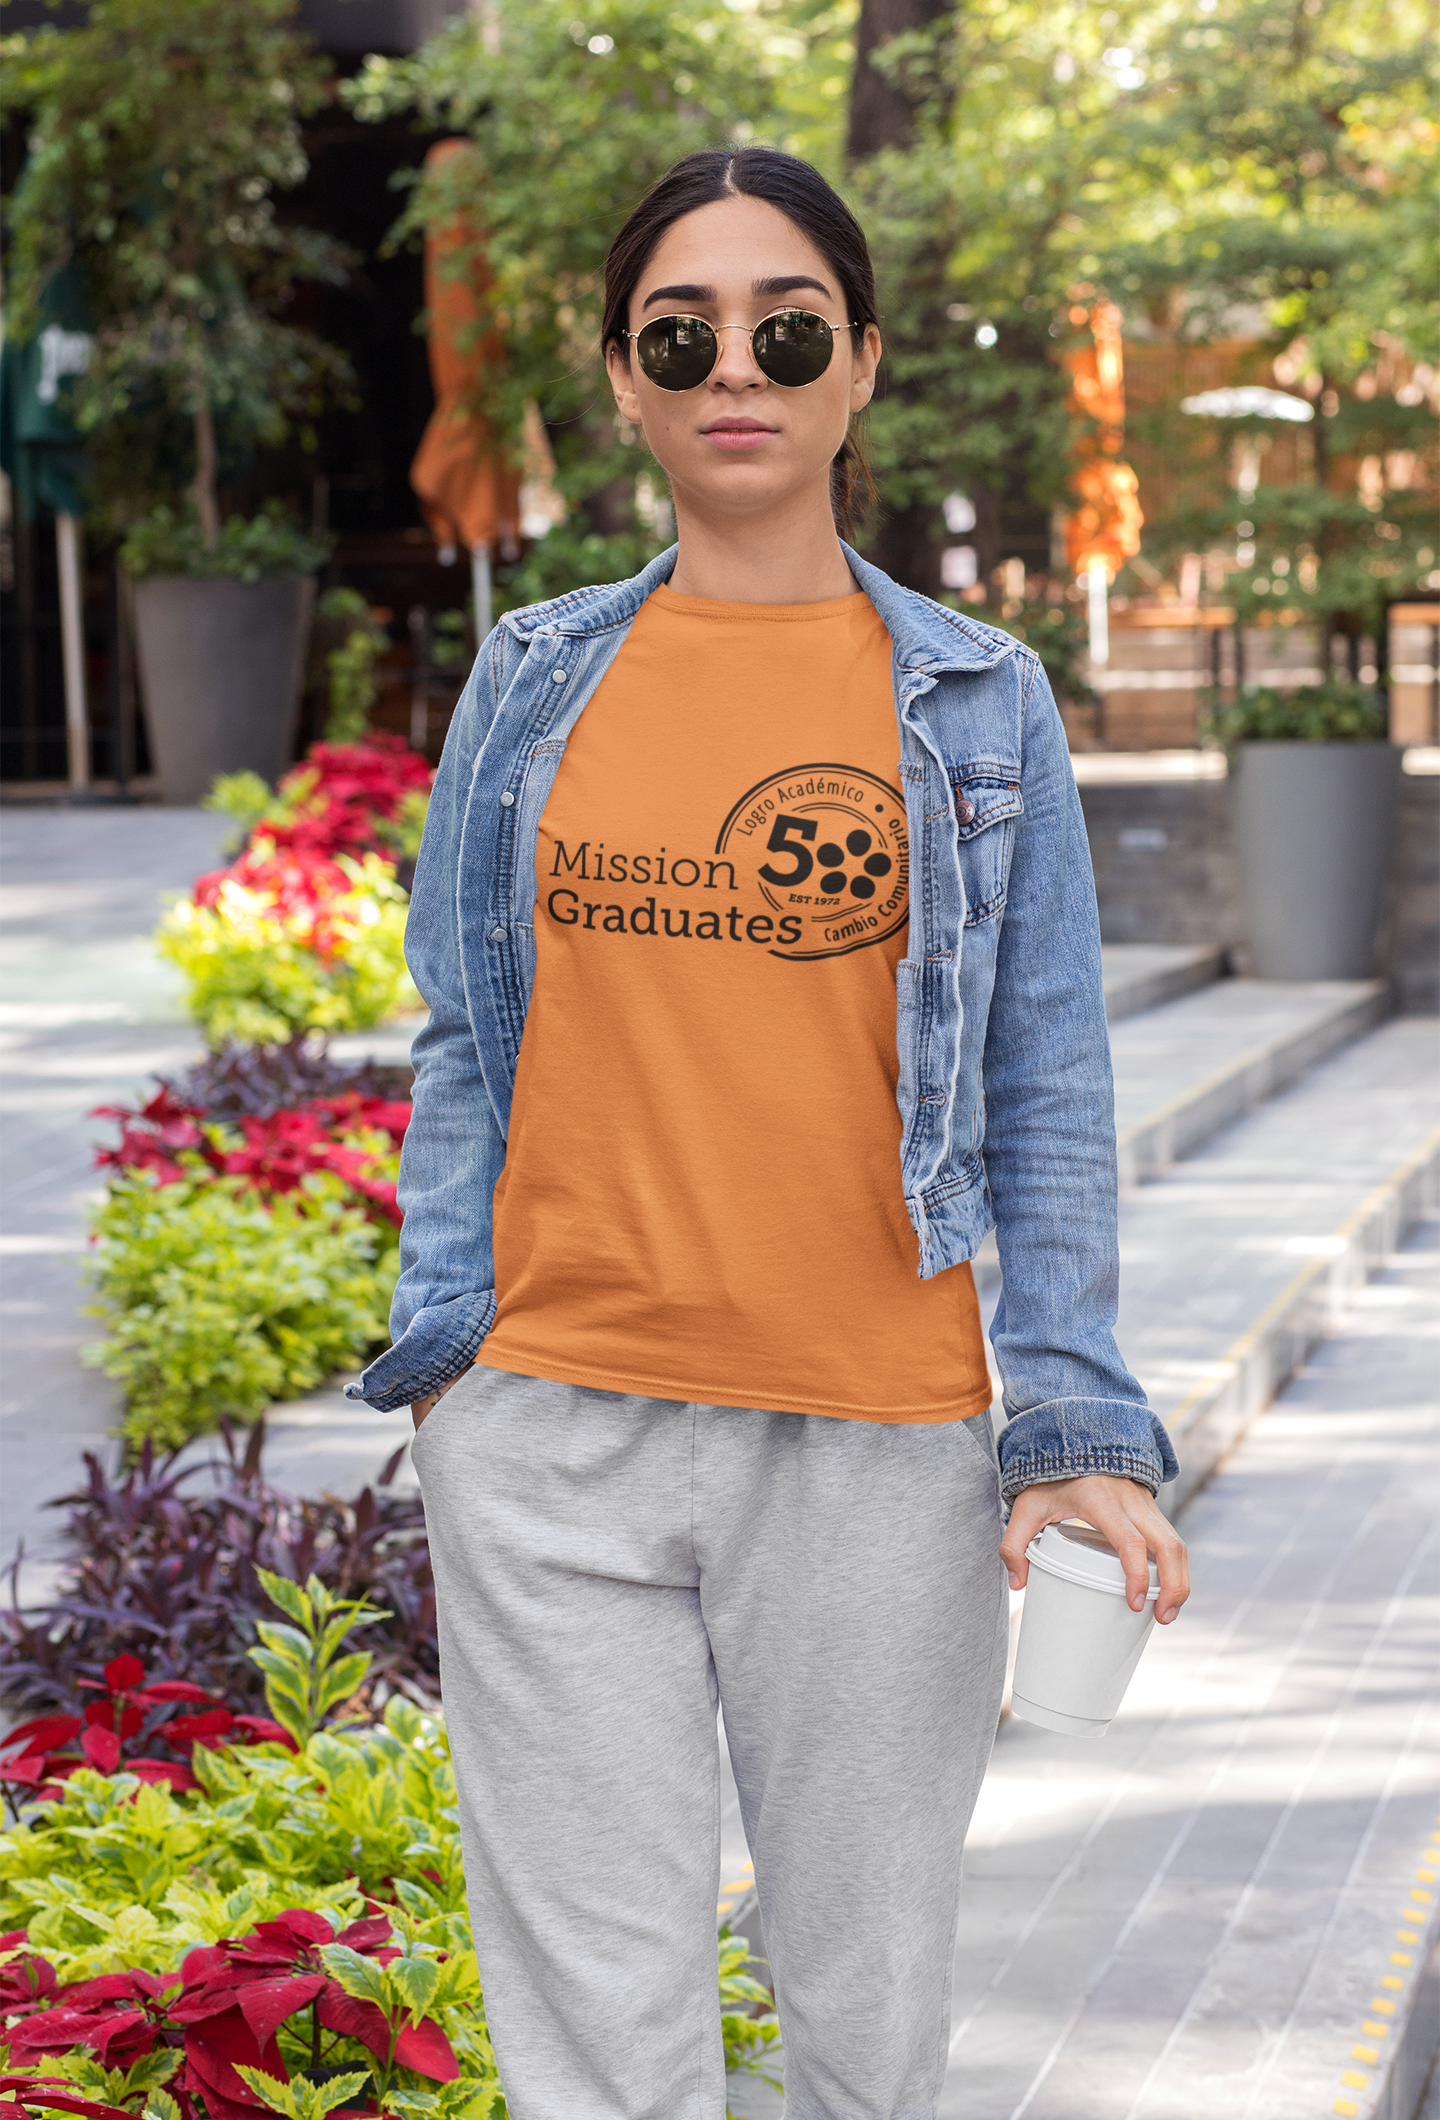 Logro Academico. Cambio Comunitario Camiseta de algodón orgánico unisex Unisex t-shirt (naranja)